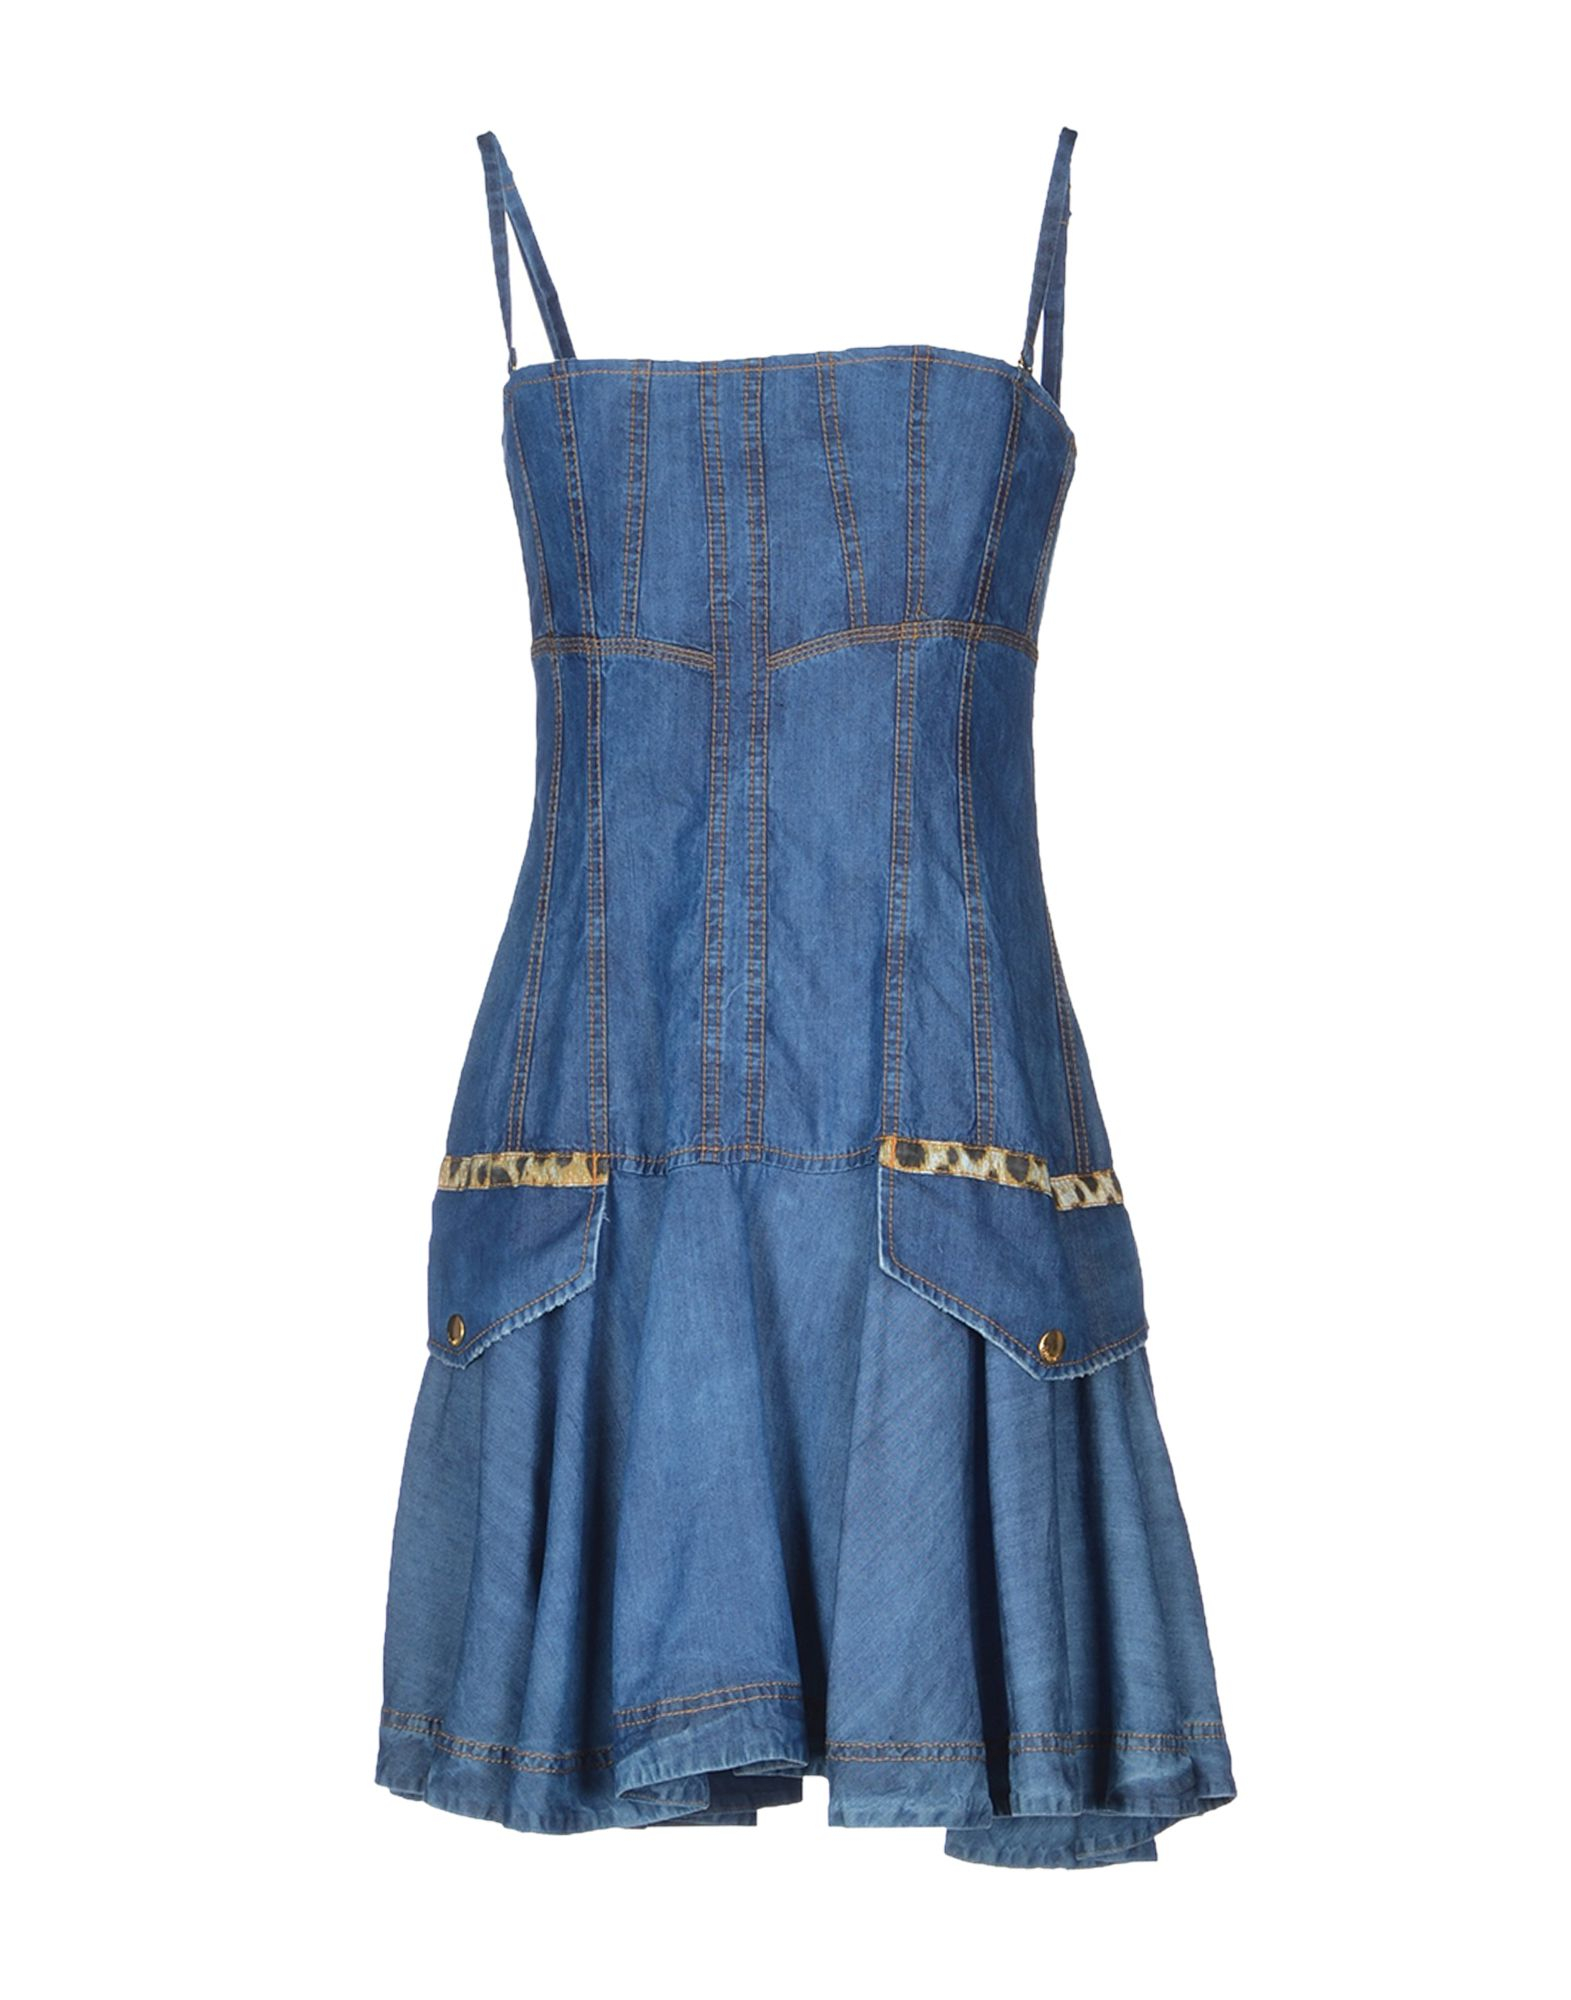 Just Cavalli Short Dress in Blue | Lyst